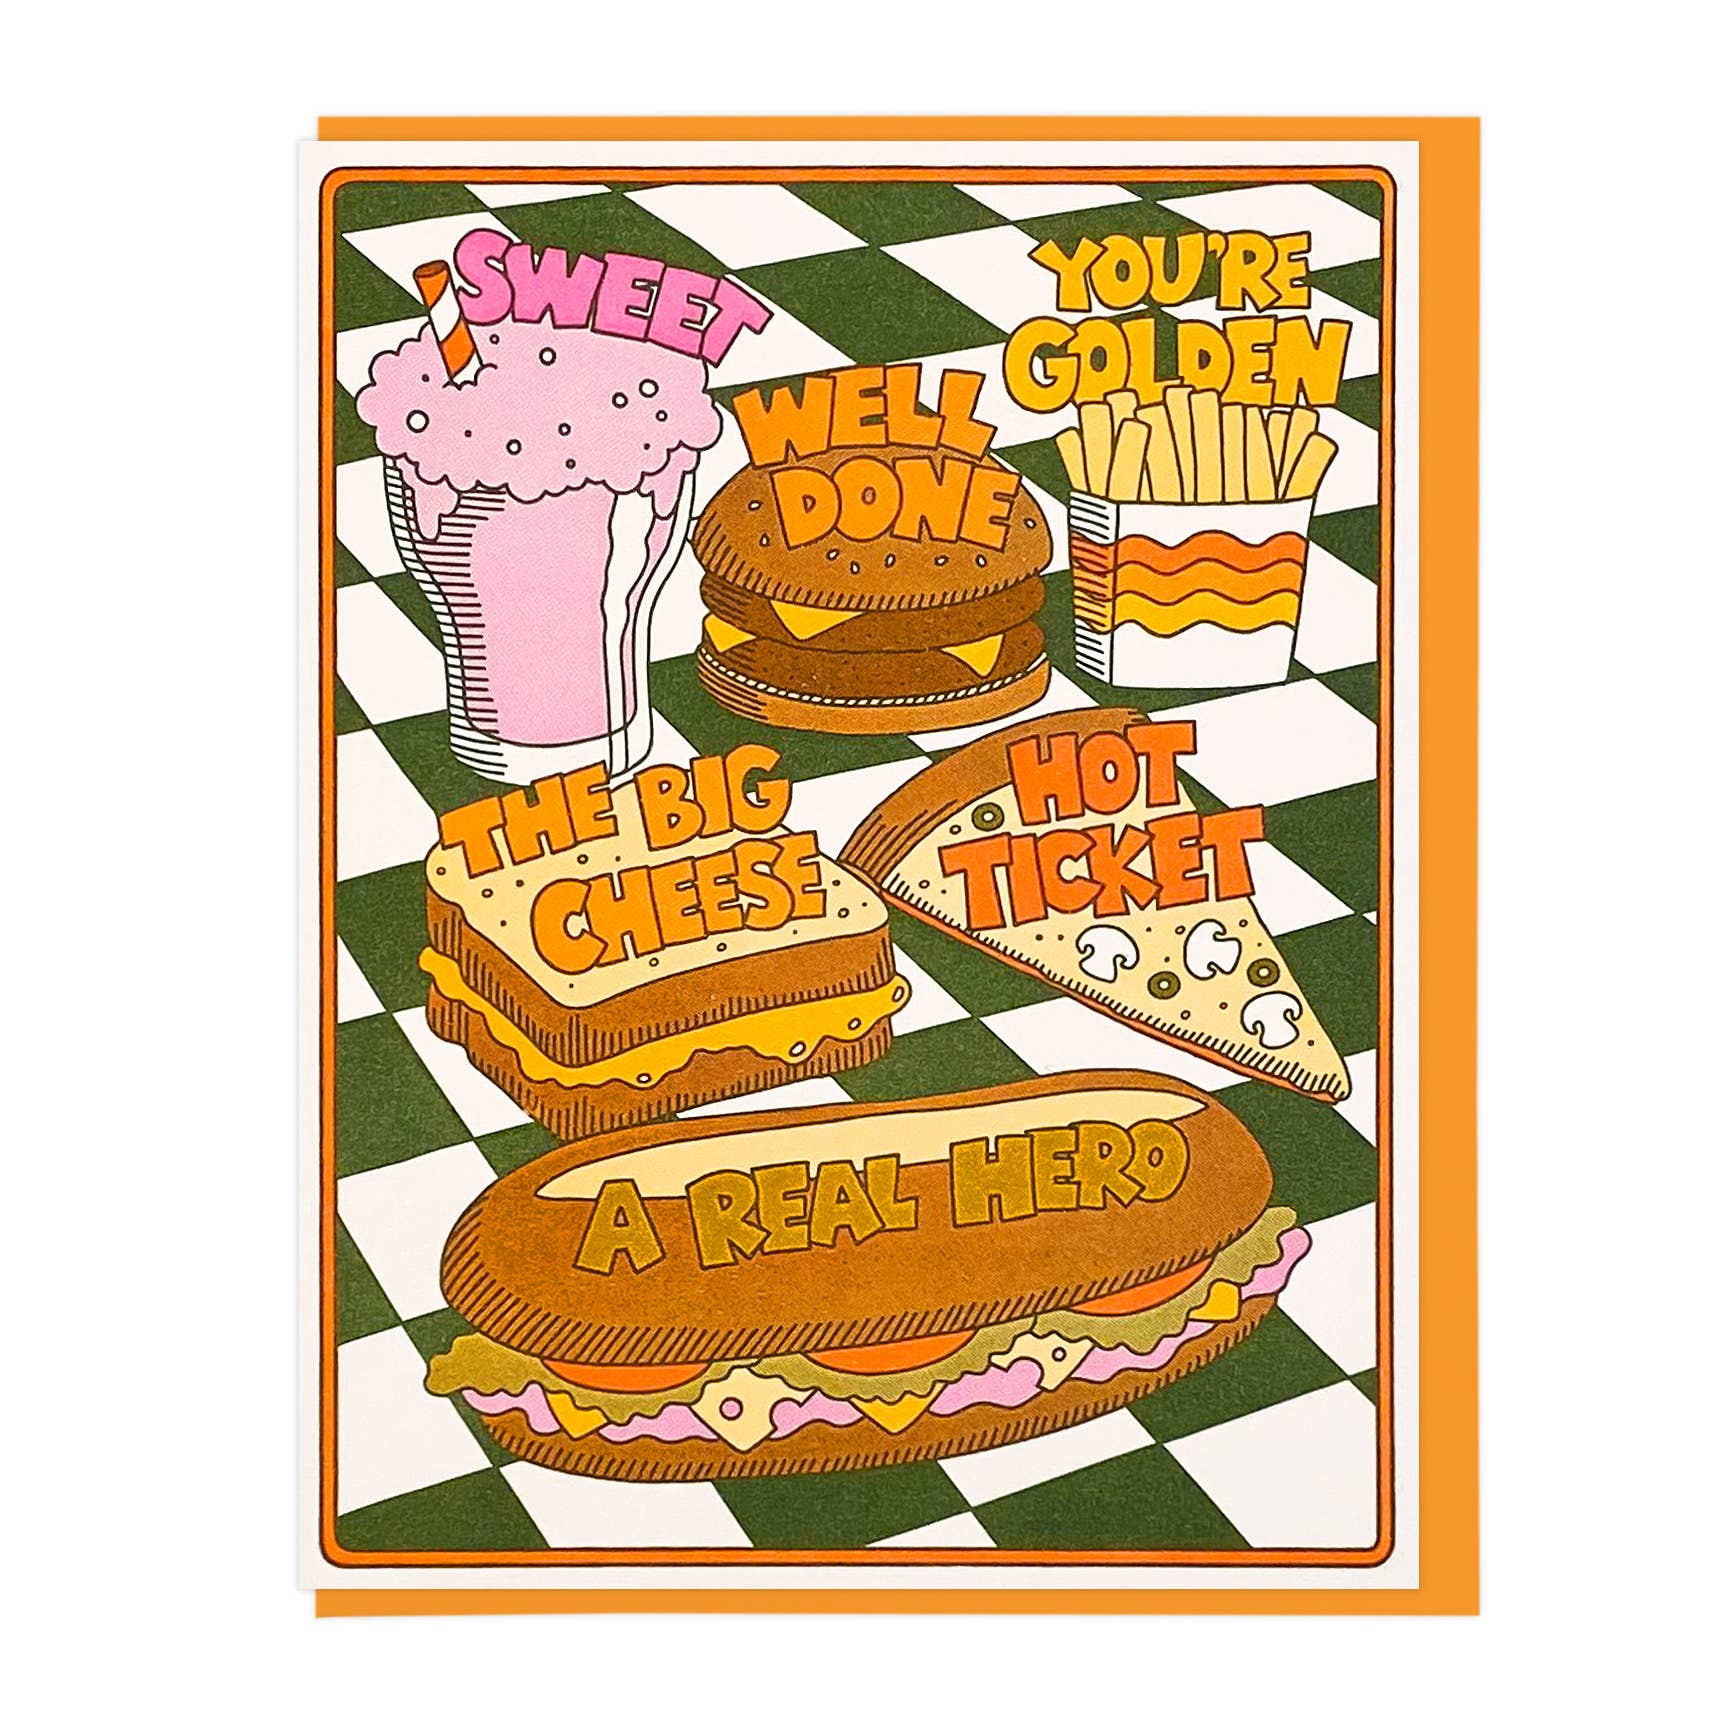 Greeting card -- has various fast food treats: milkshake, cheeseburger, fries, grilled cheese, pizza, and a hero sub 